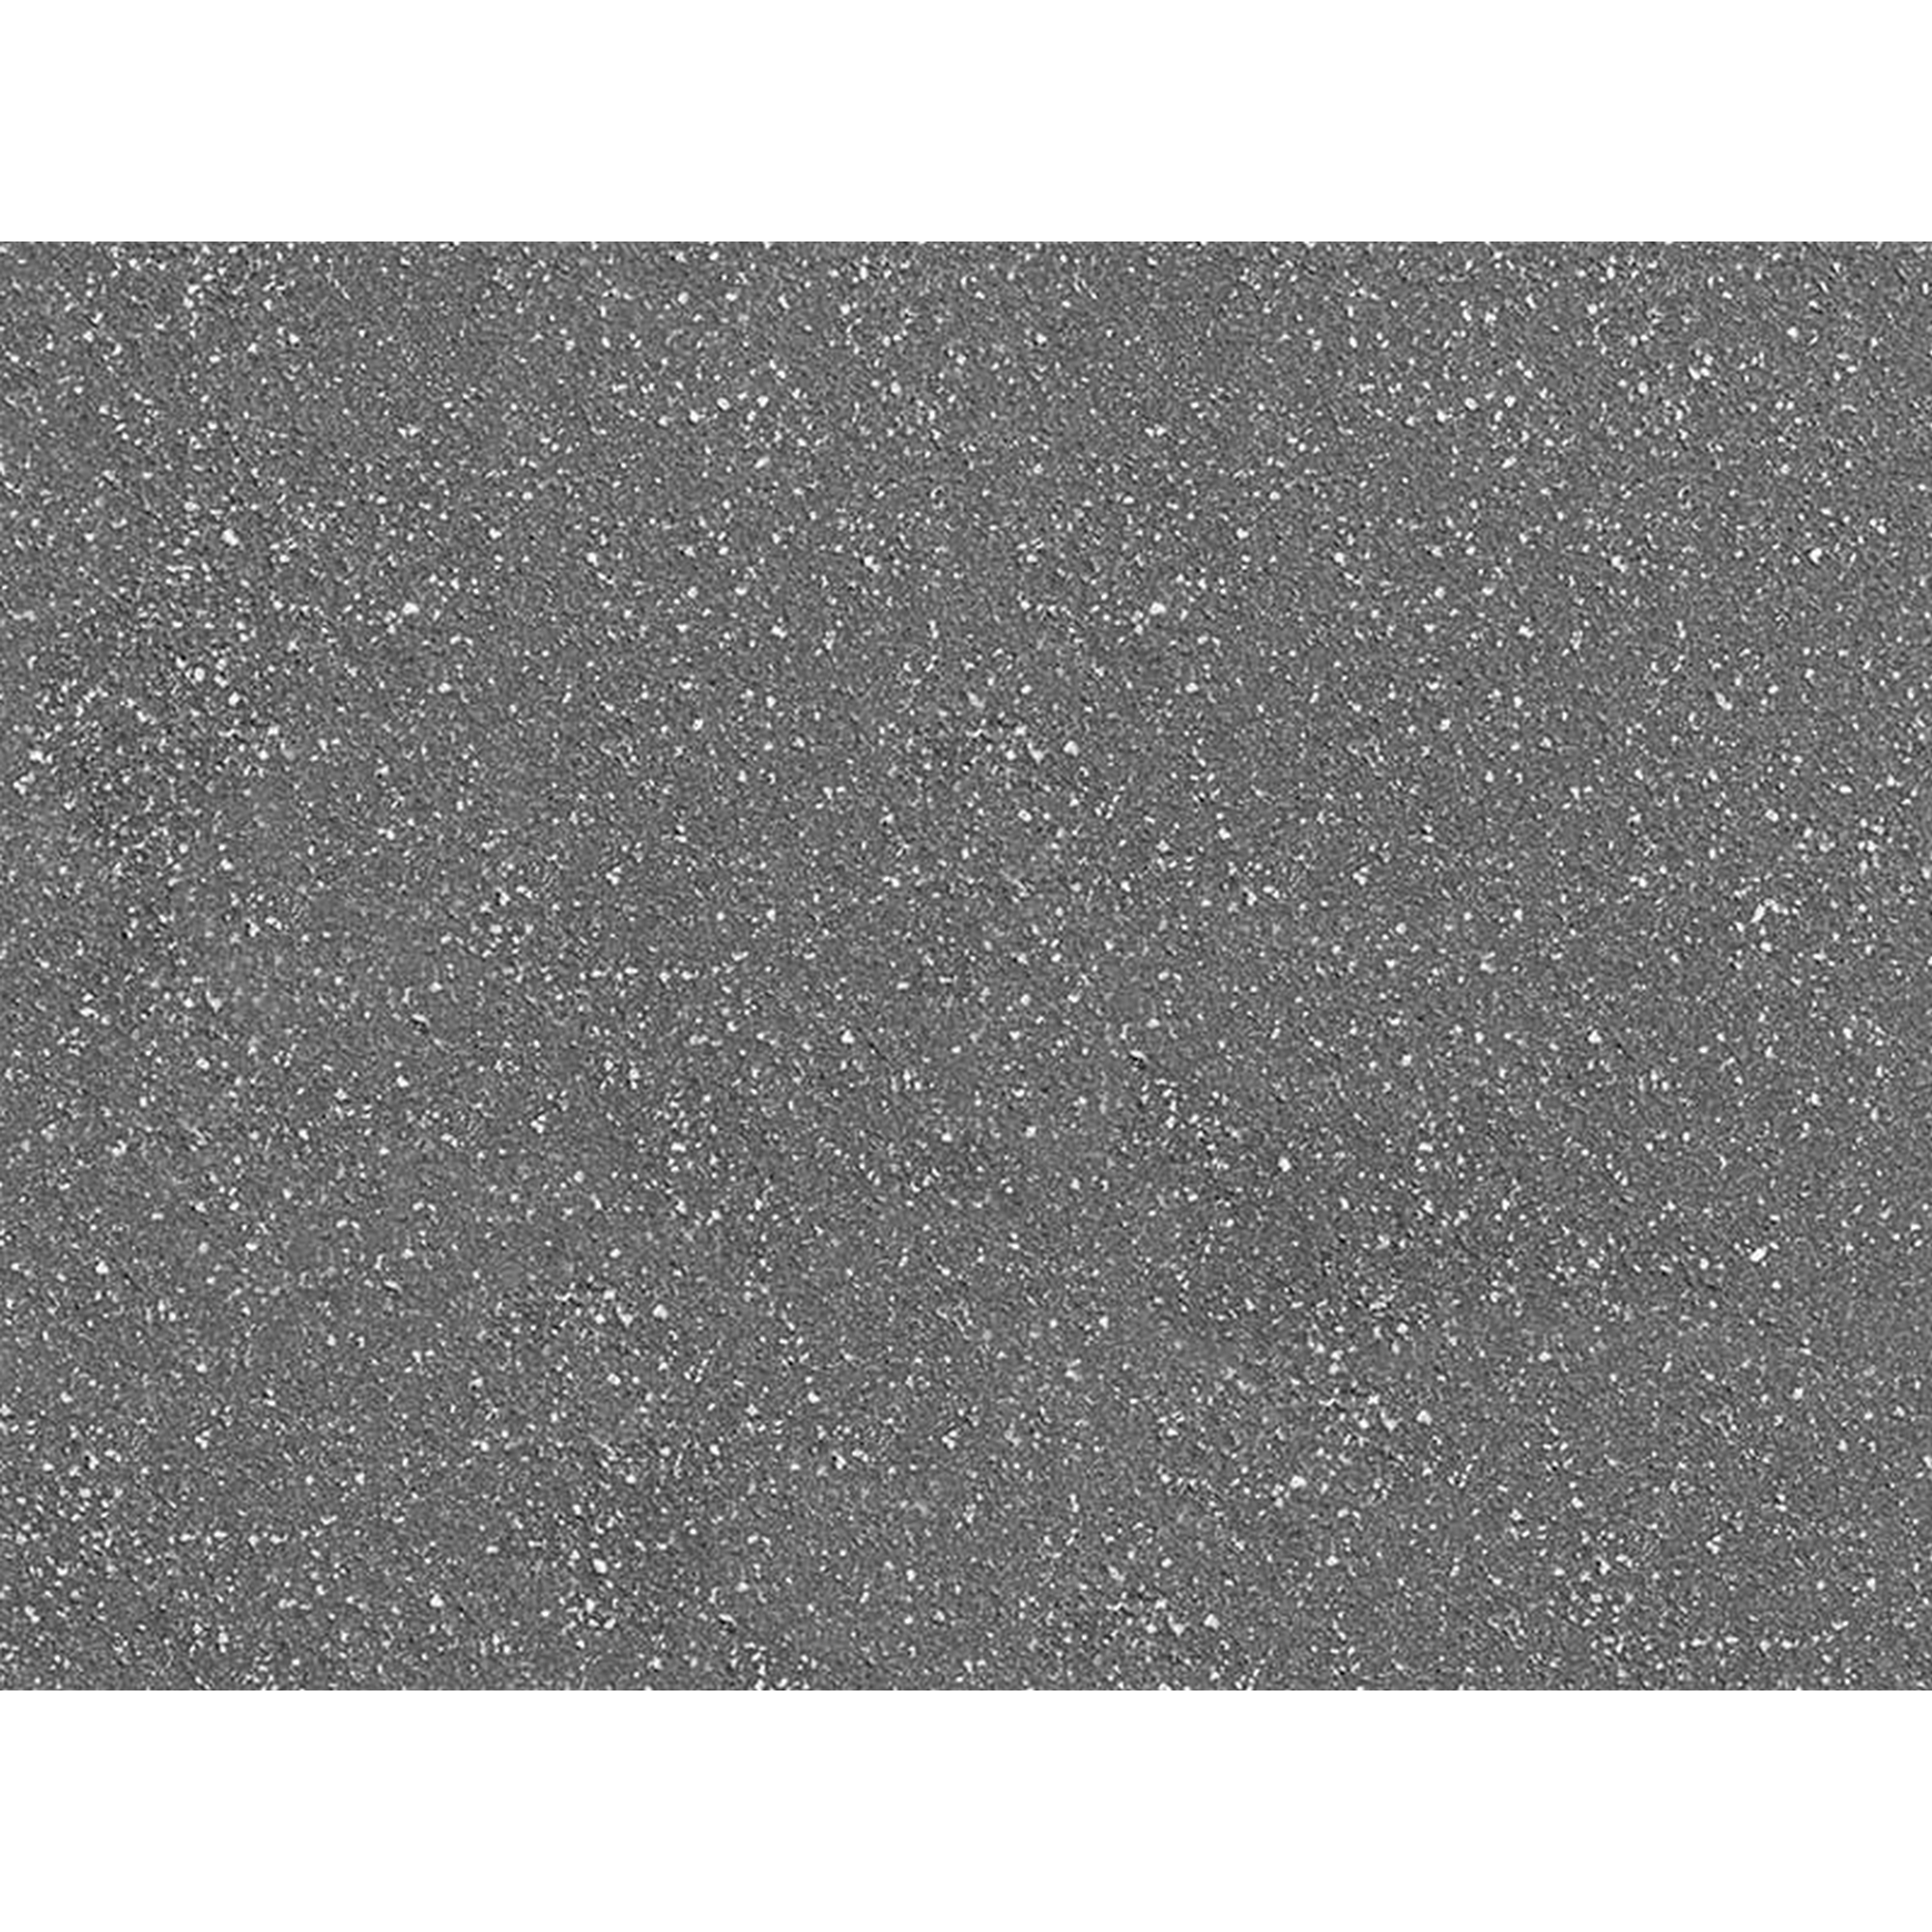 Terrassenplatte 'T-Court Classic' Beton basaltfarben 60 x 40 x 4 cm + product picture